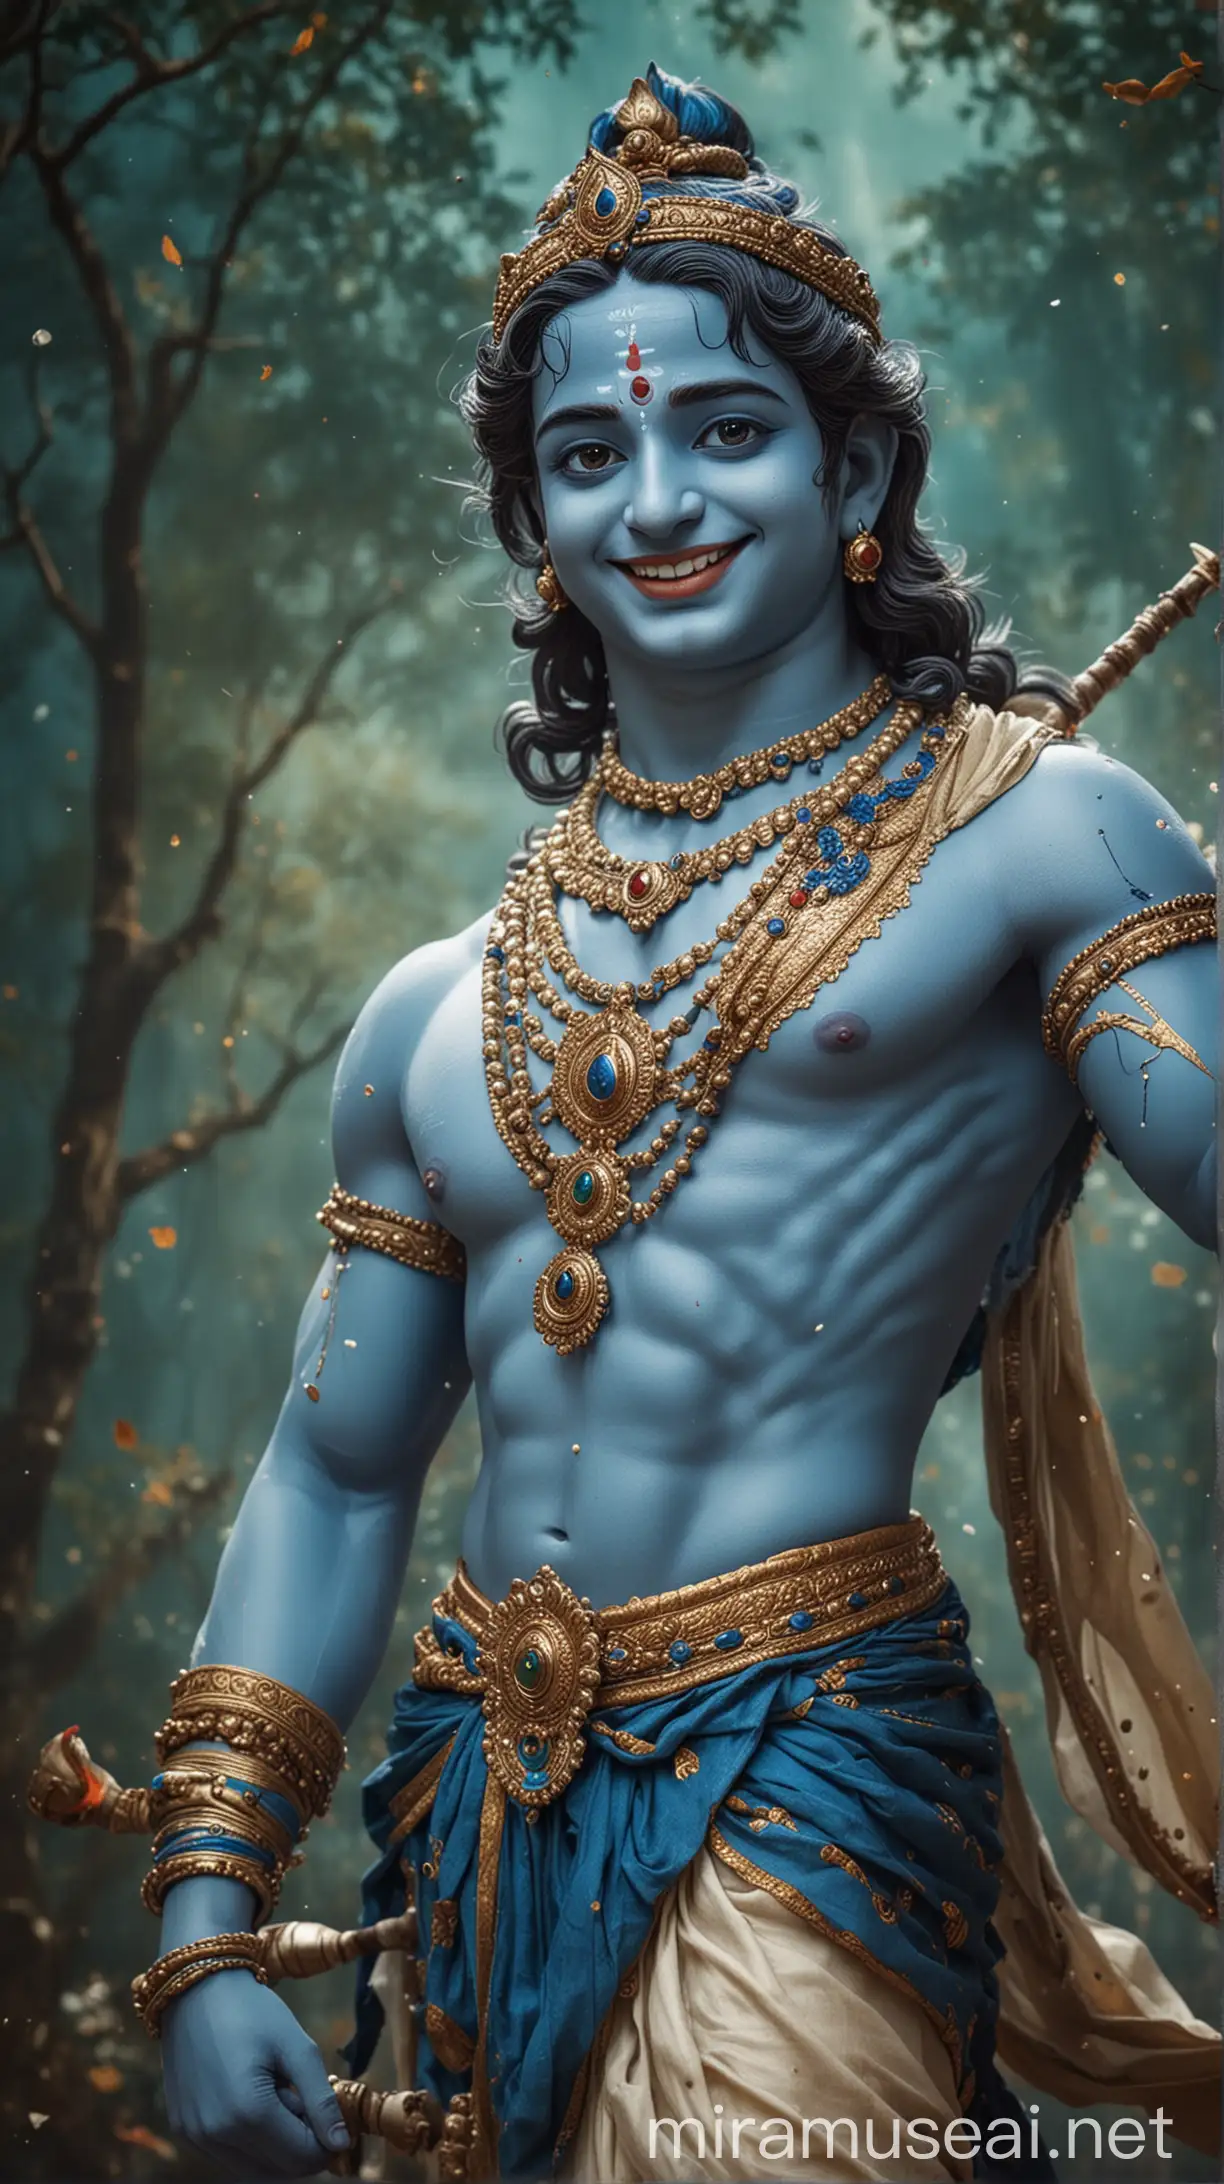 Lord Krishna in Mahabharata Setting Radiant Blue God with a Joyful Smile